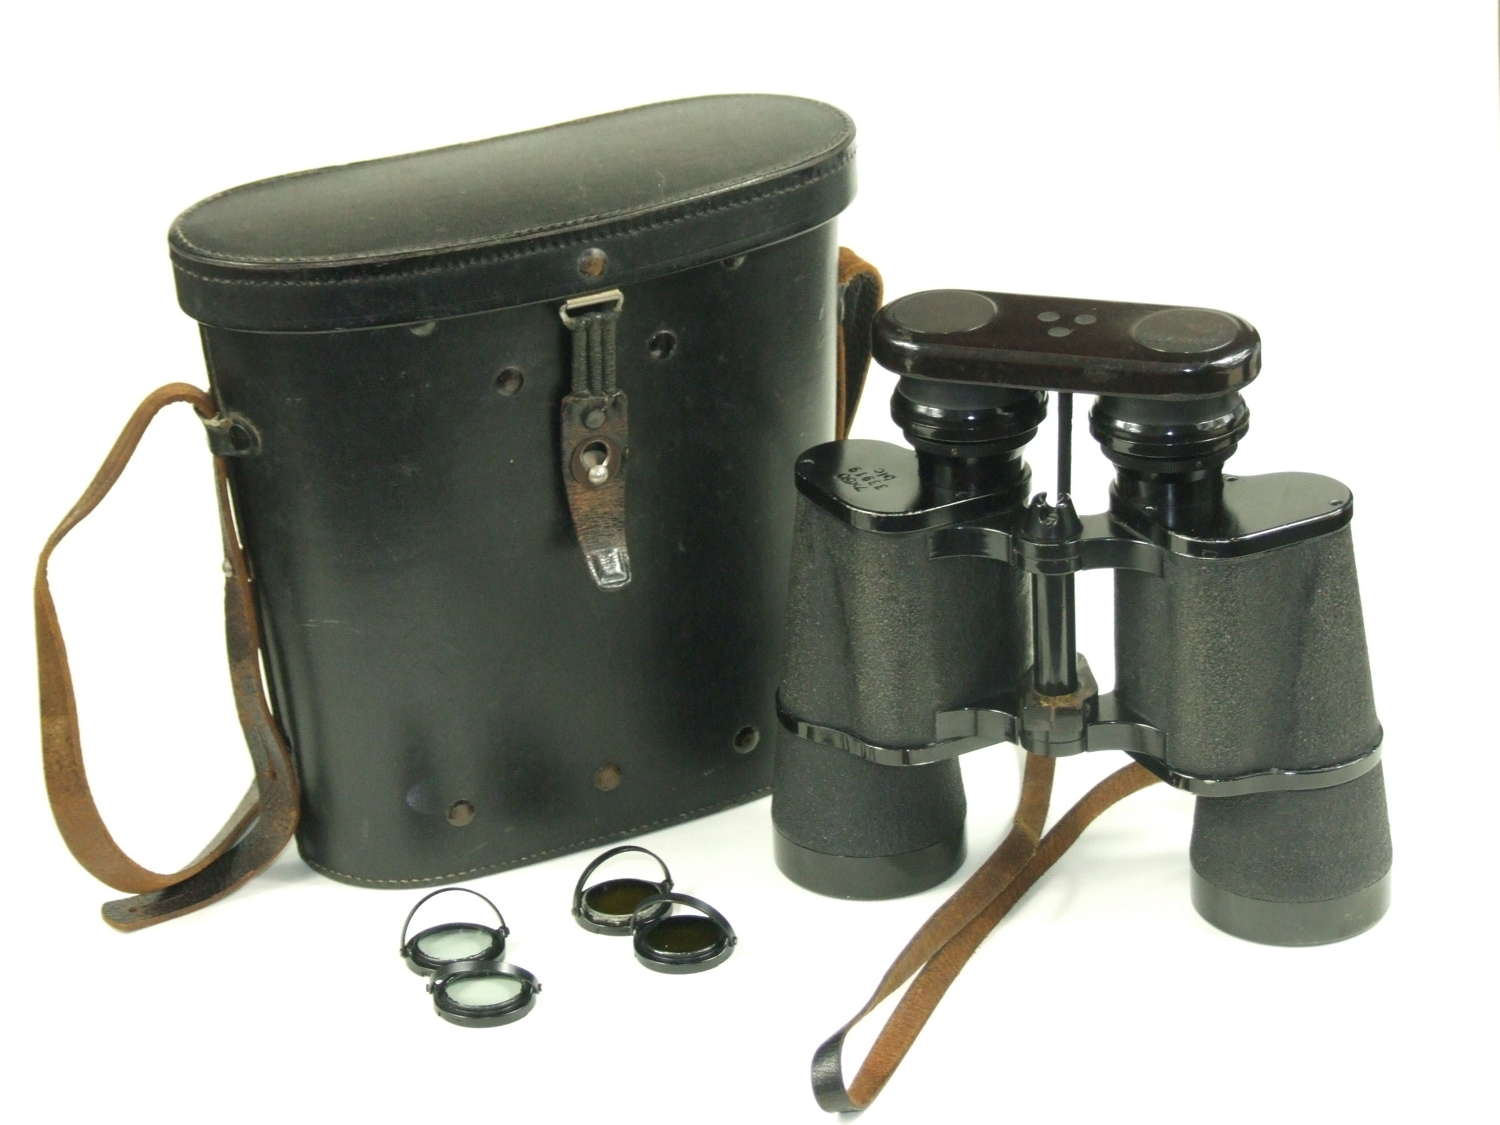 Kriegsmarine Zeiss Gas Mask Ocular Binoculars and Case